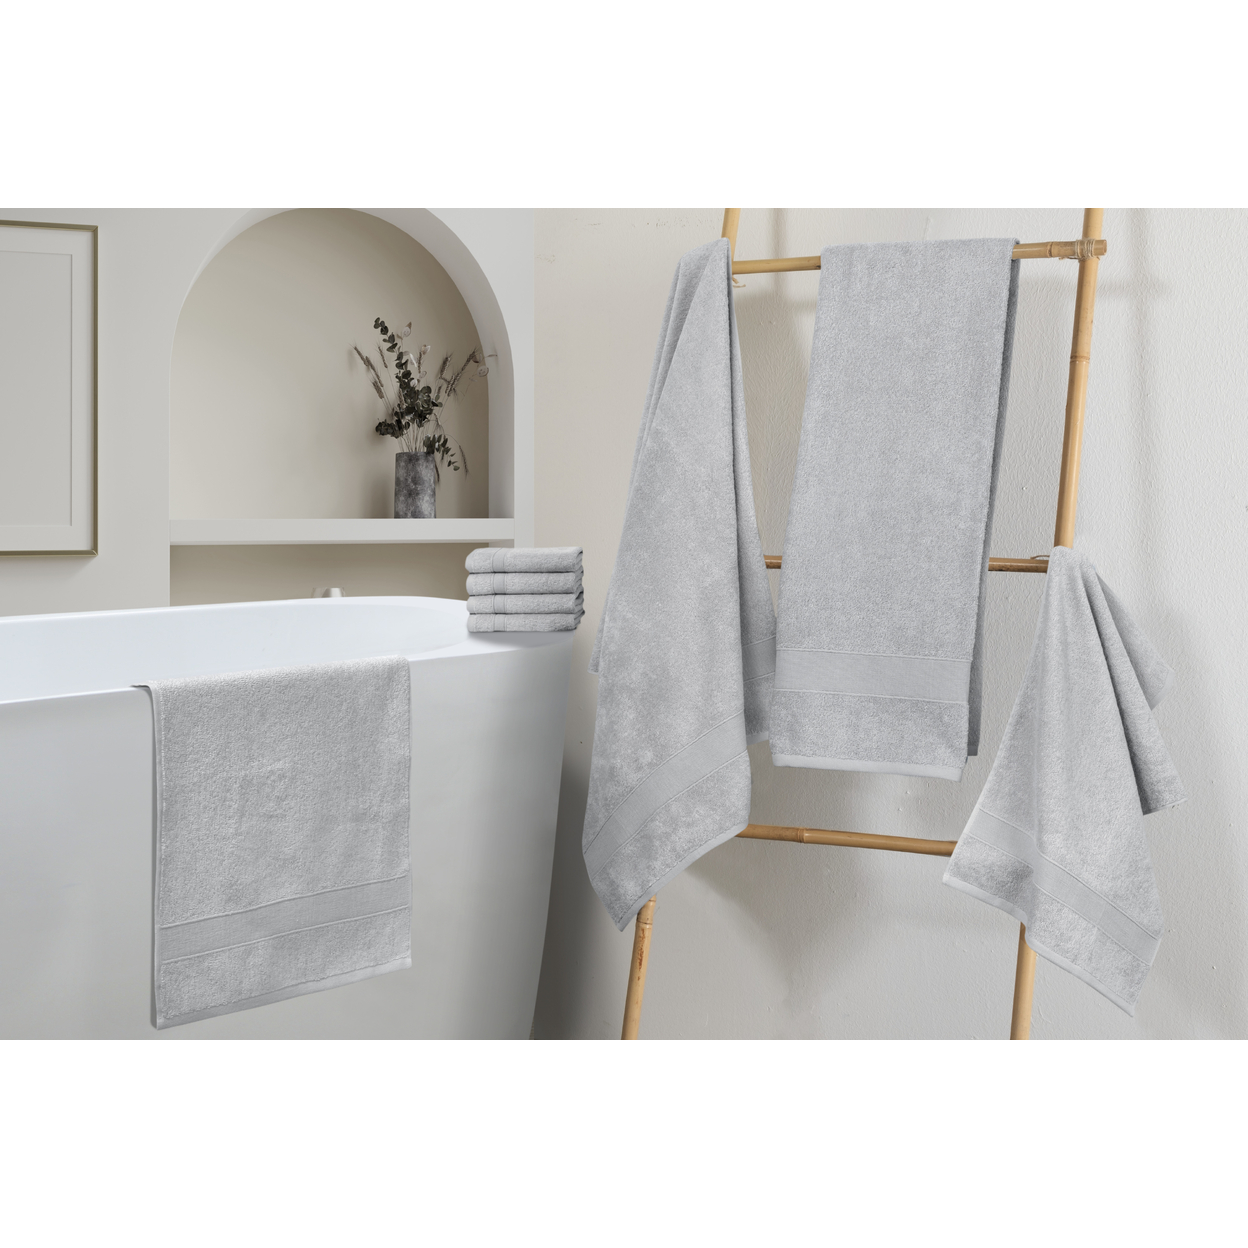 Chic Home Premium 8-Piece 100% Pure Turkish Cotton Towel Set, Woven Dobby Border Design, OEKO-TEX Standard 100 Certified - Grey